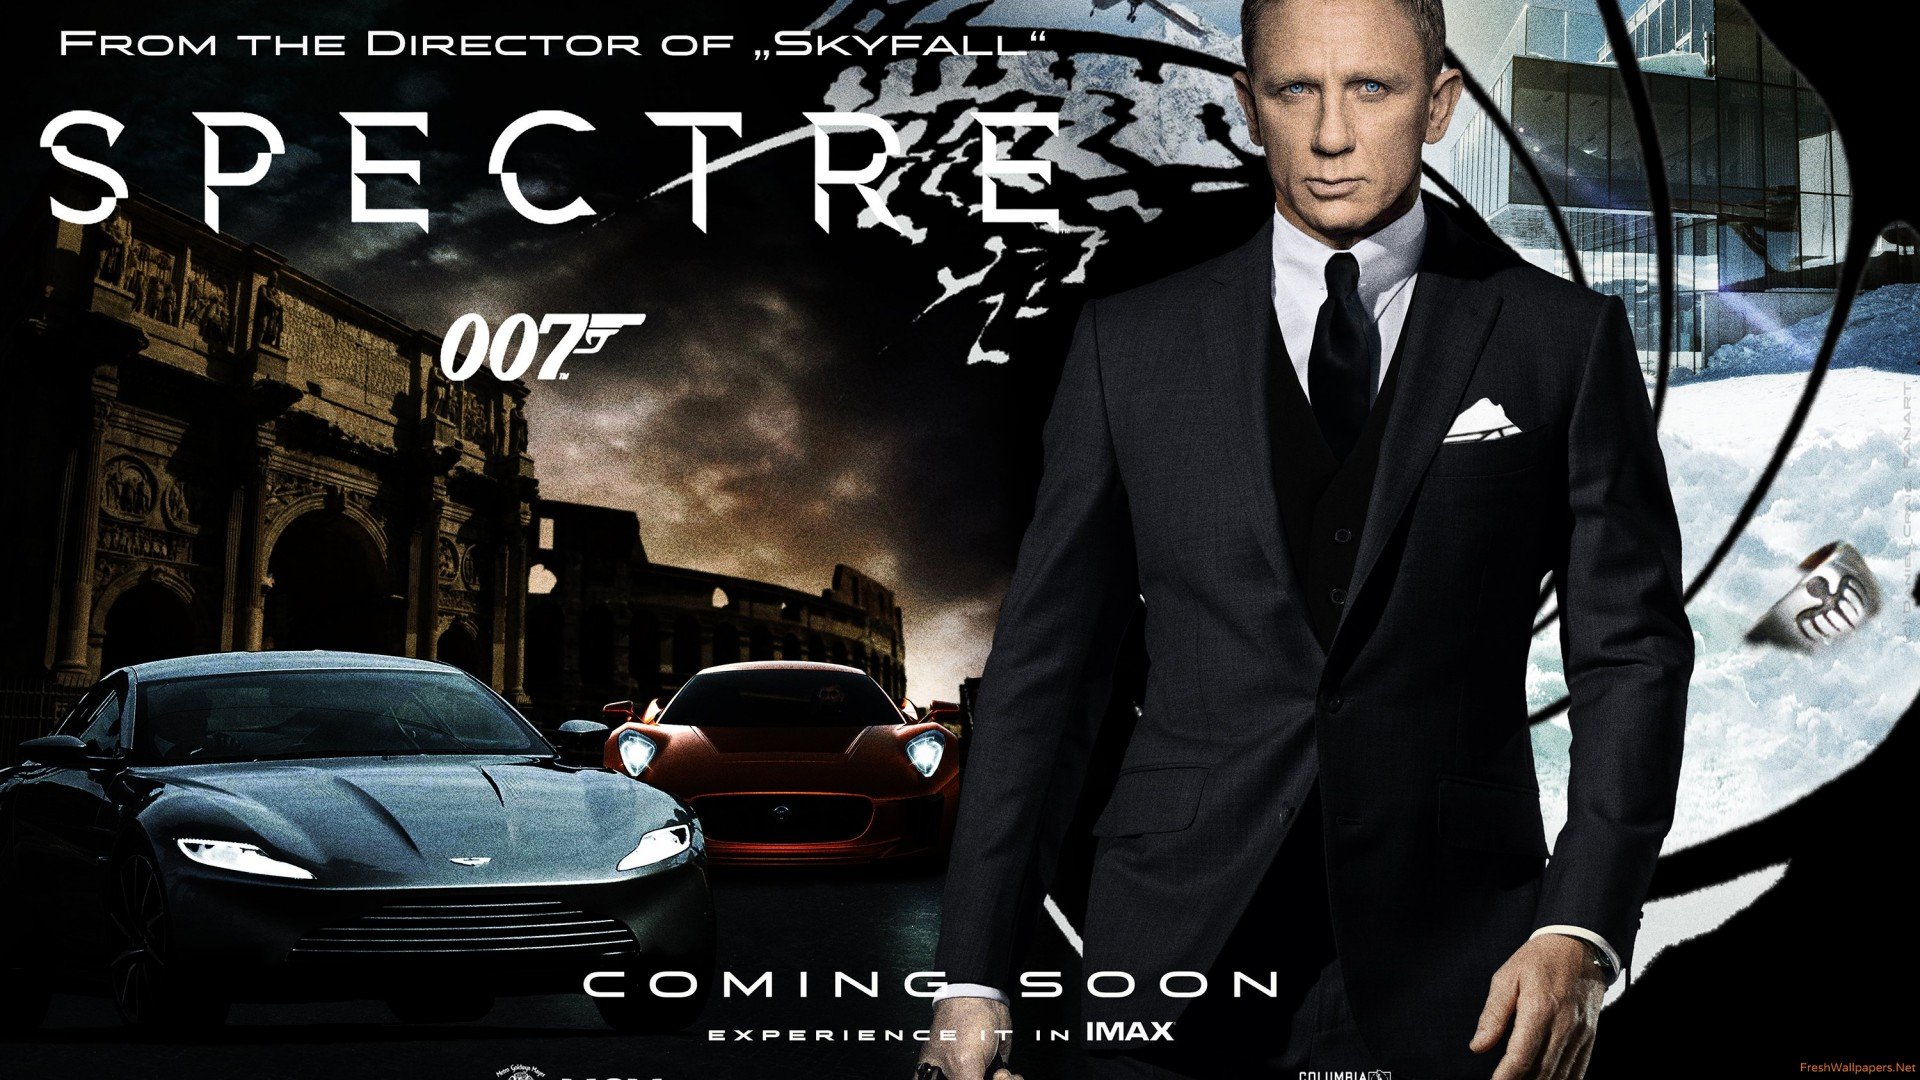 007 spectre full movie online free